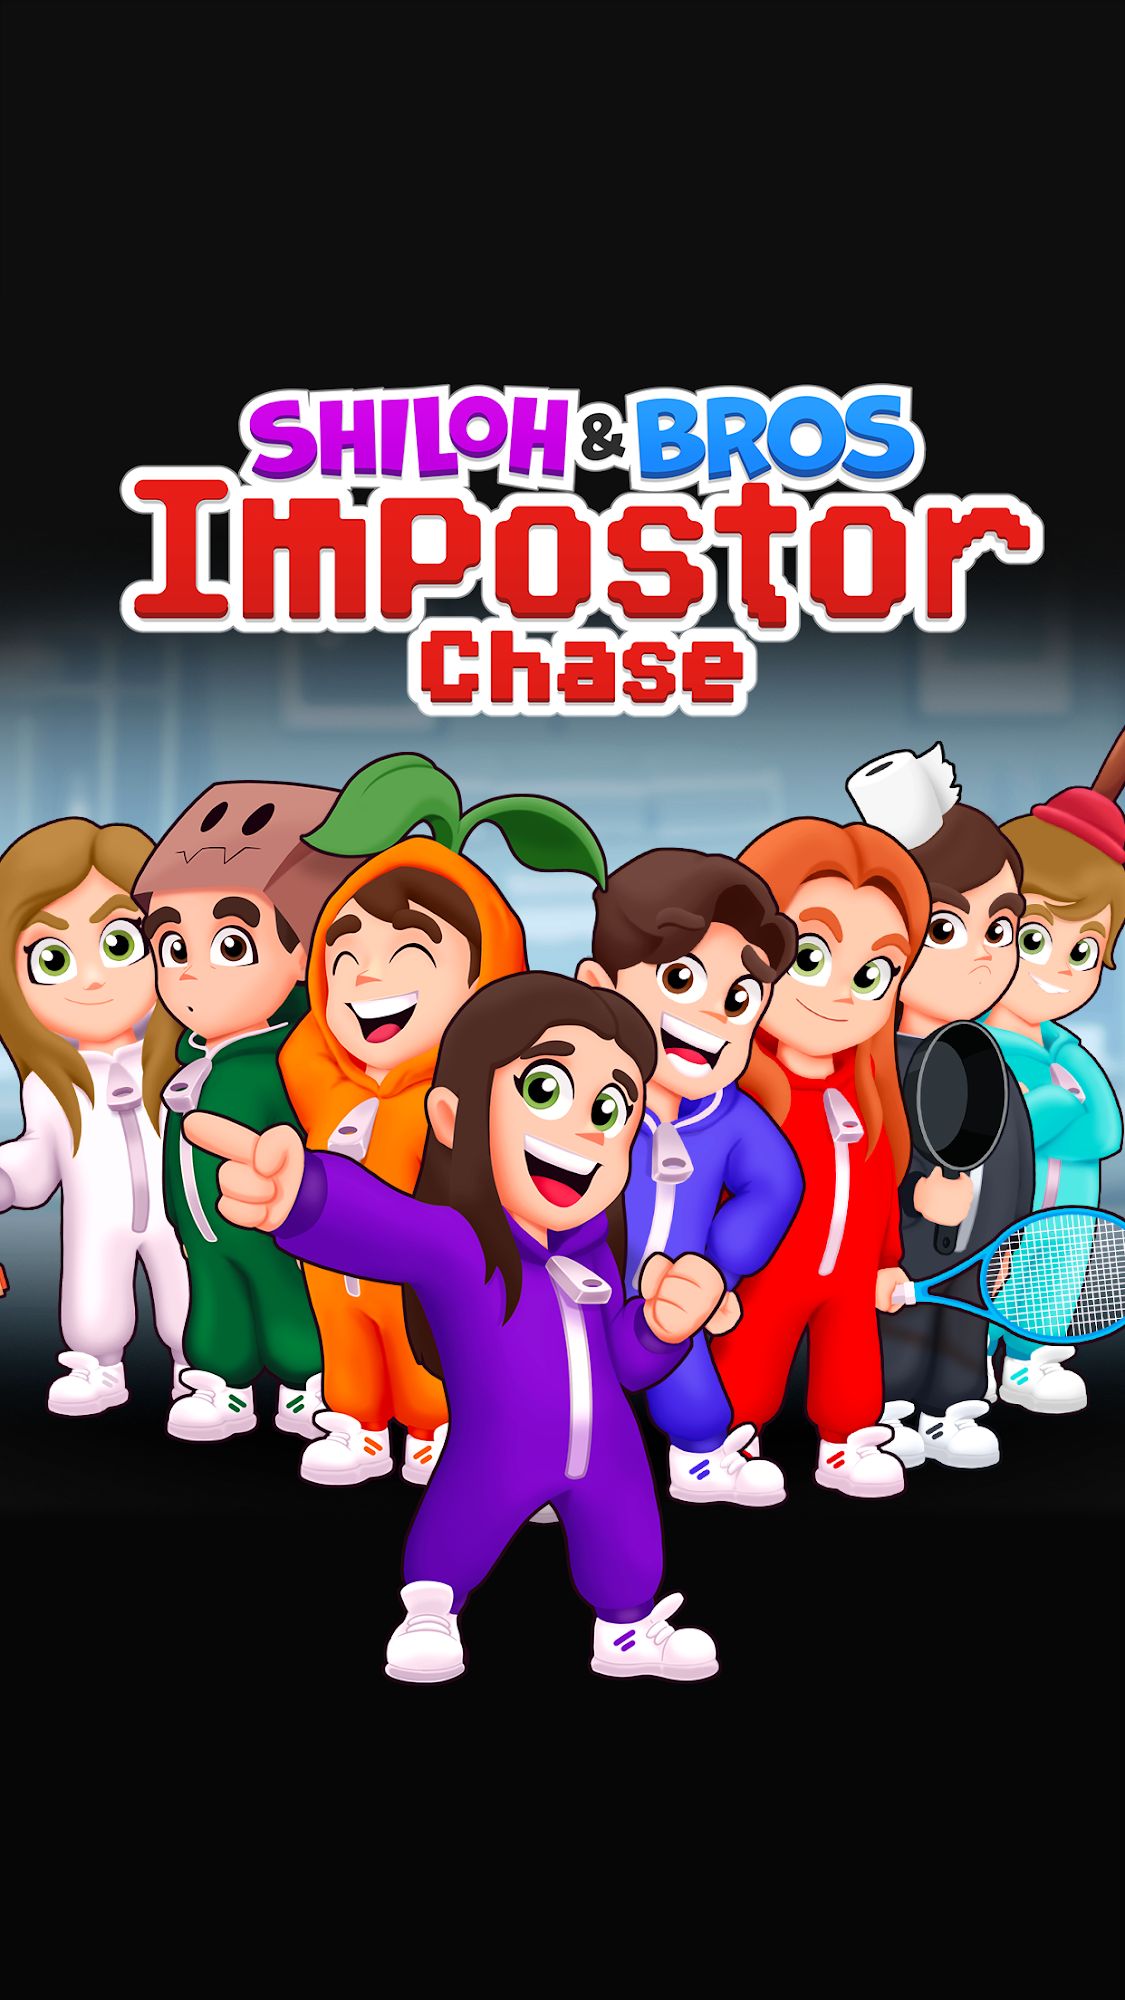 Download Shiloh & Bros Impostor Chase für Android kostenlos.